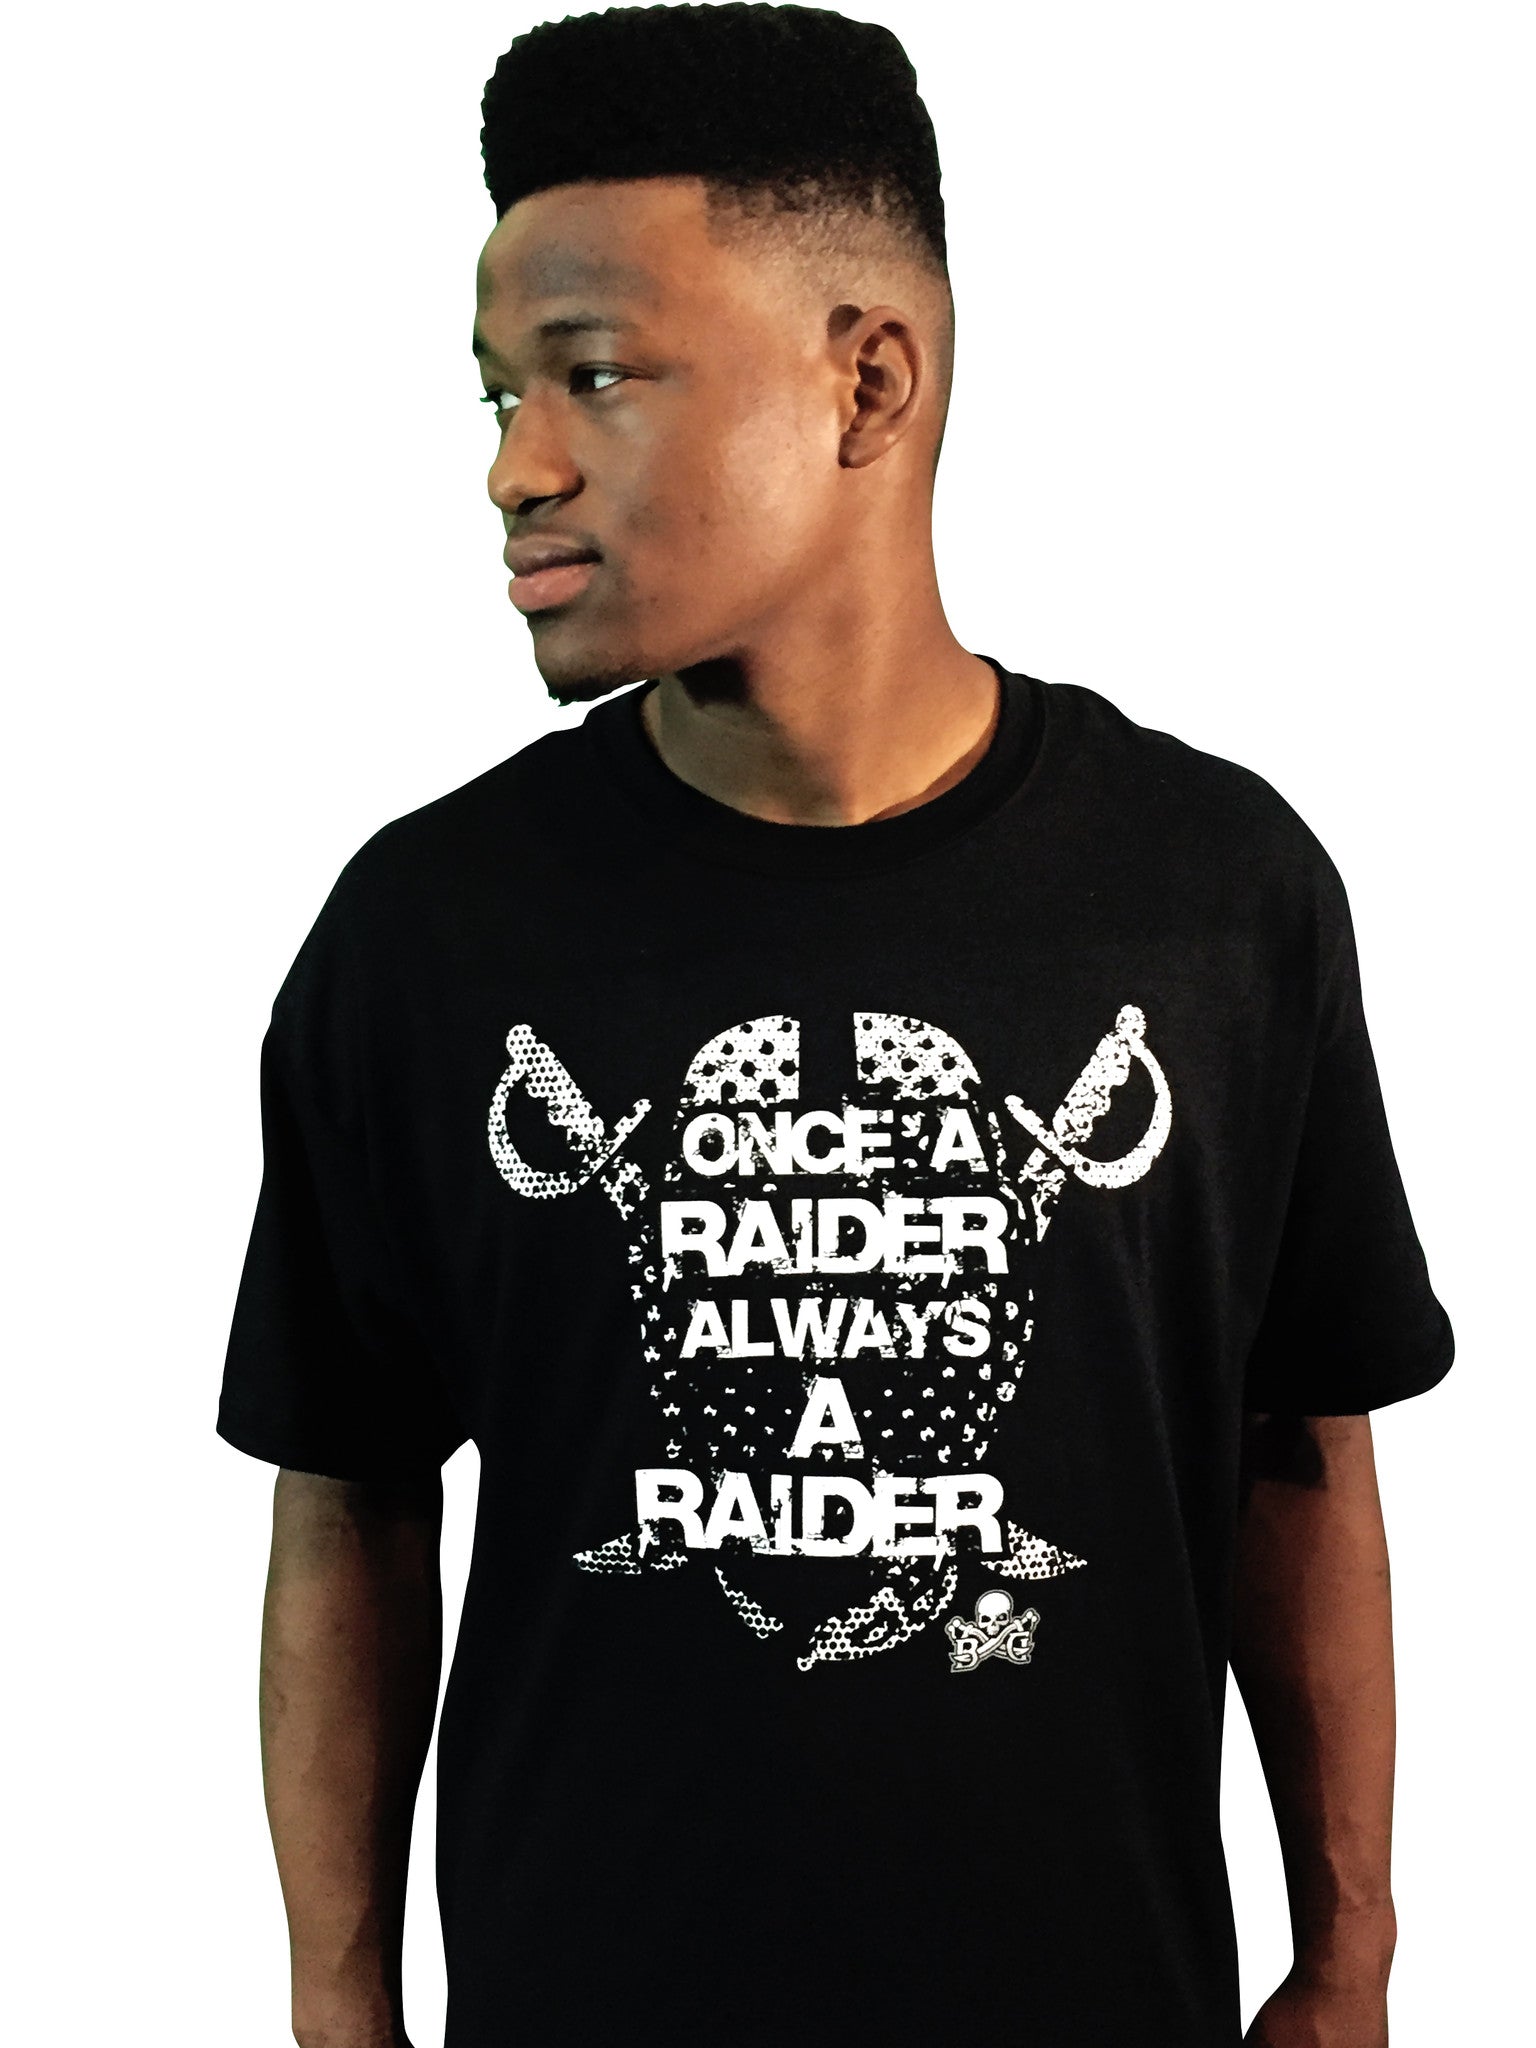 Las Vegas Raiders Nation T Shirt Once a Raider Always a Raider